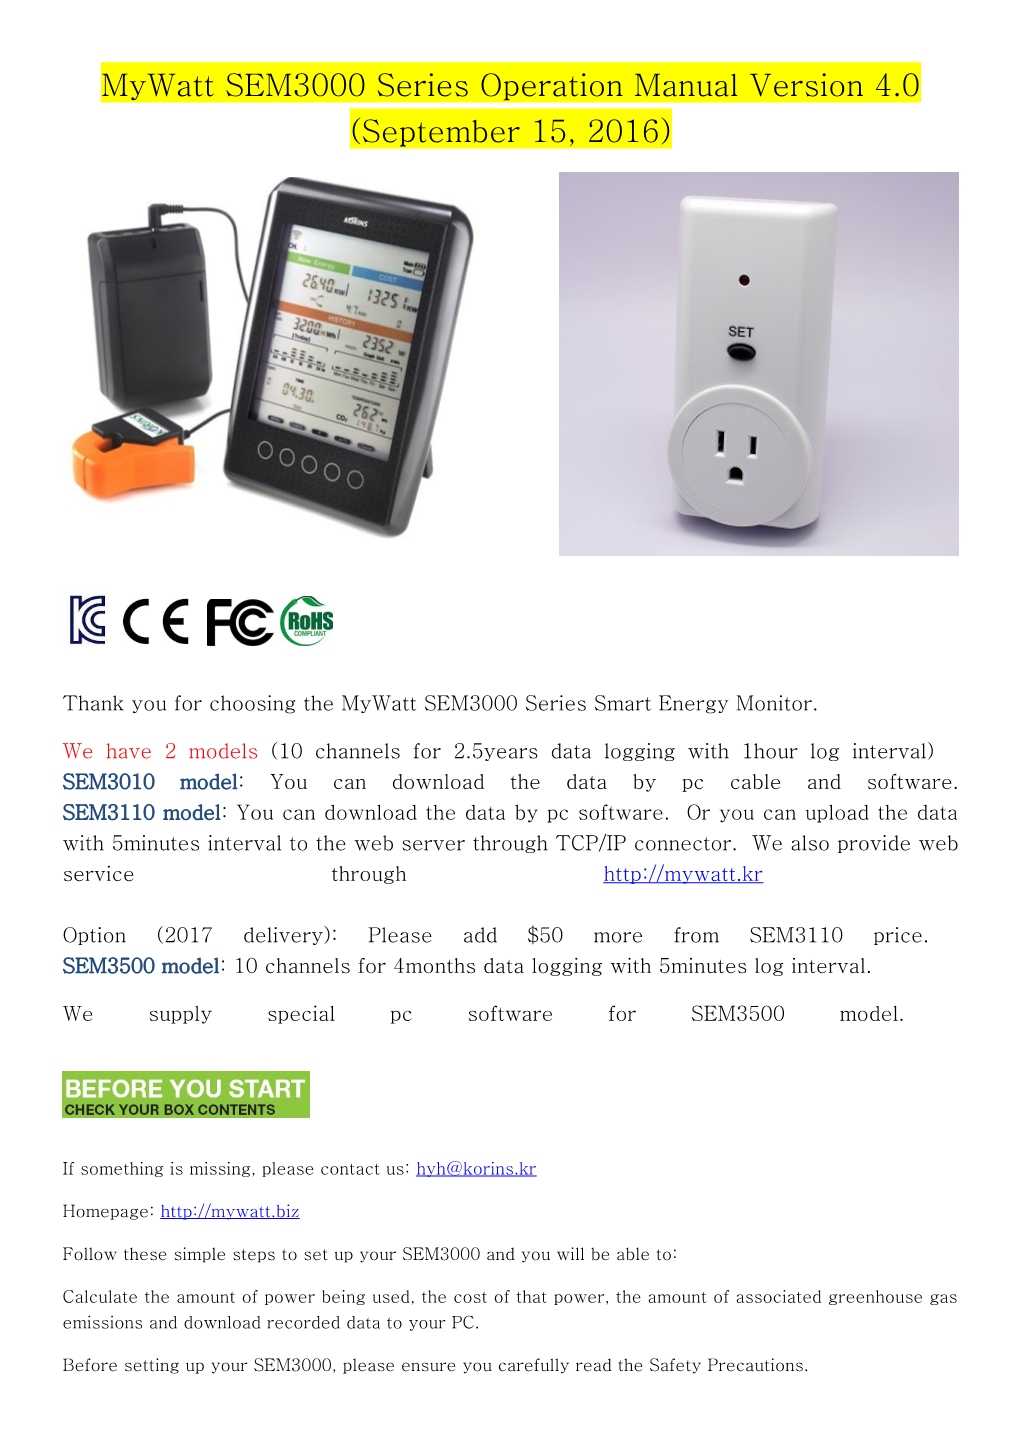 Thank You for Choosing the Mywatt SEM3000 Series Smart Energy Monitor